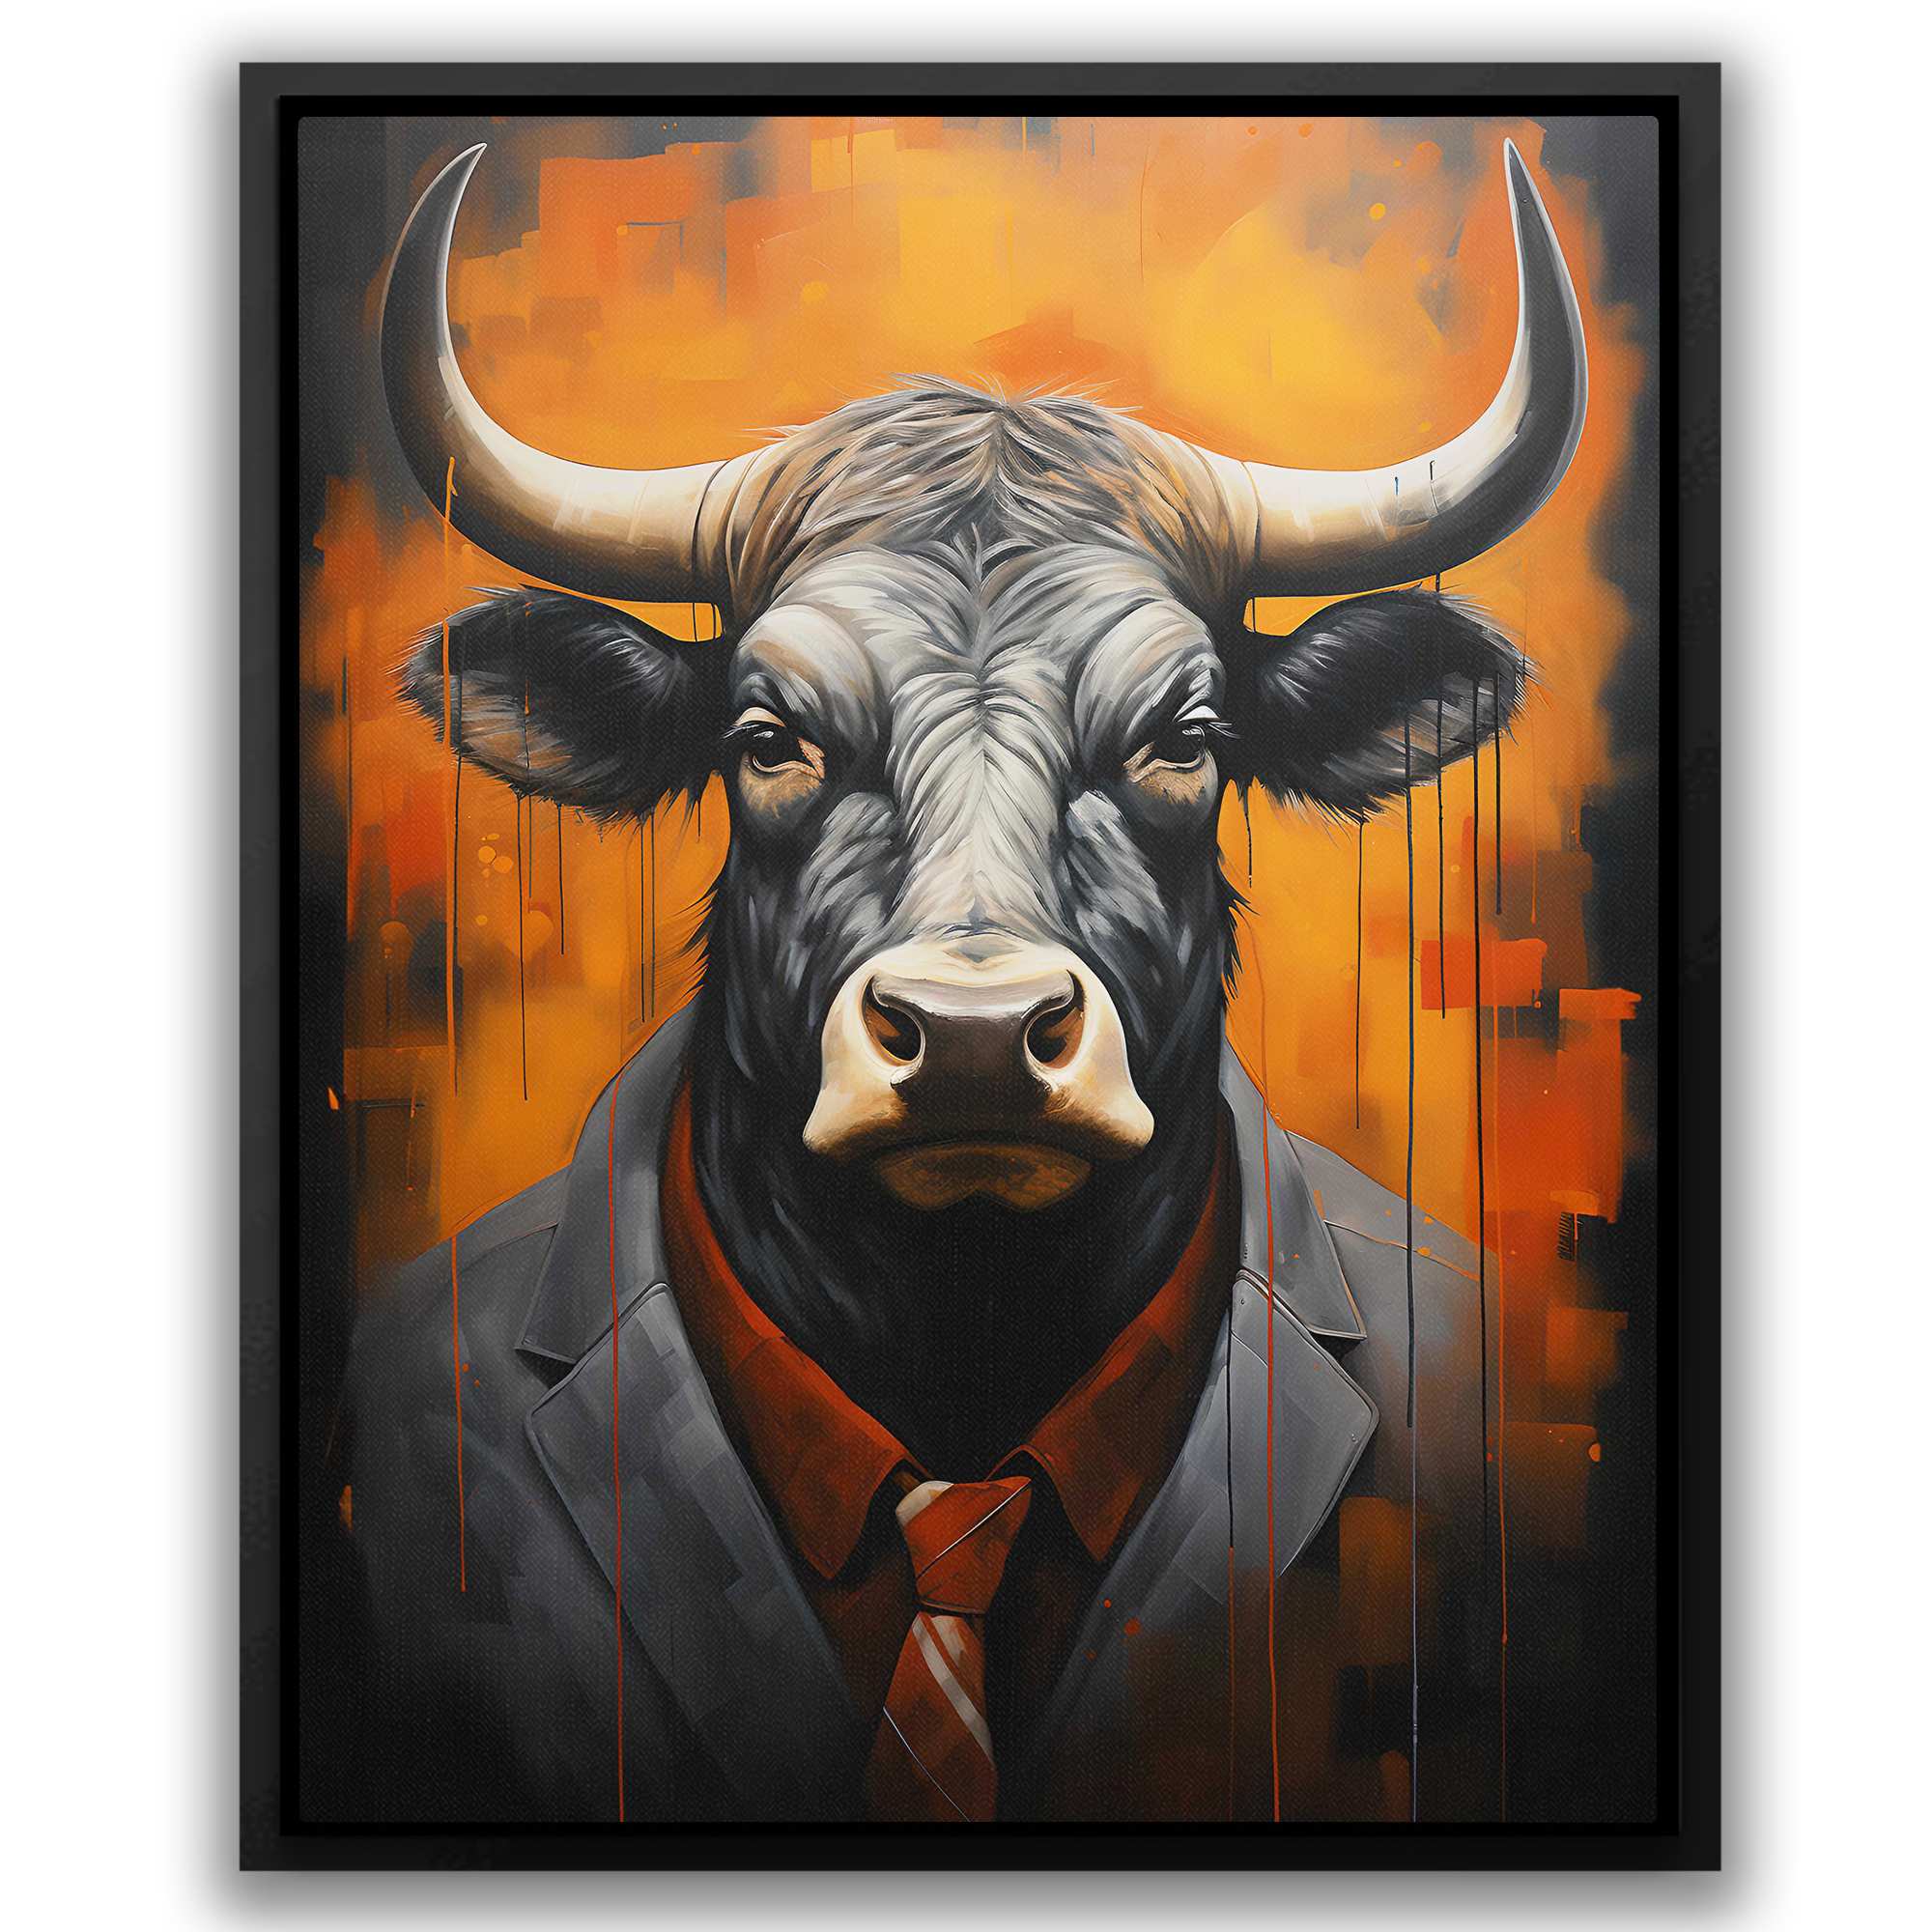 Heart and Horns: Stirring Emotions through Bull Artistry - Luxury Wall Art